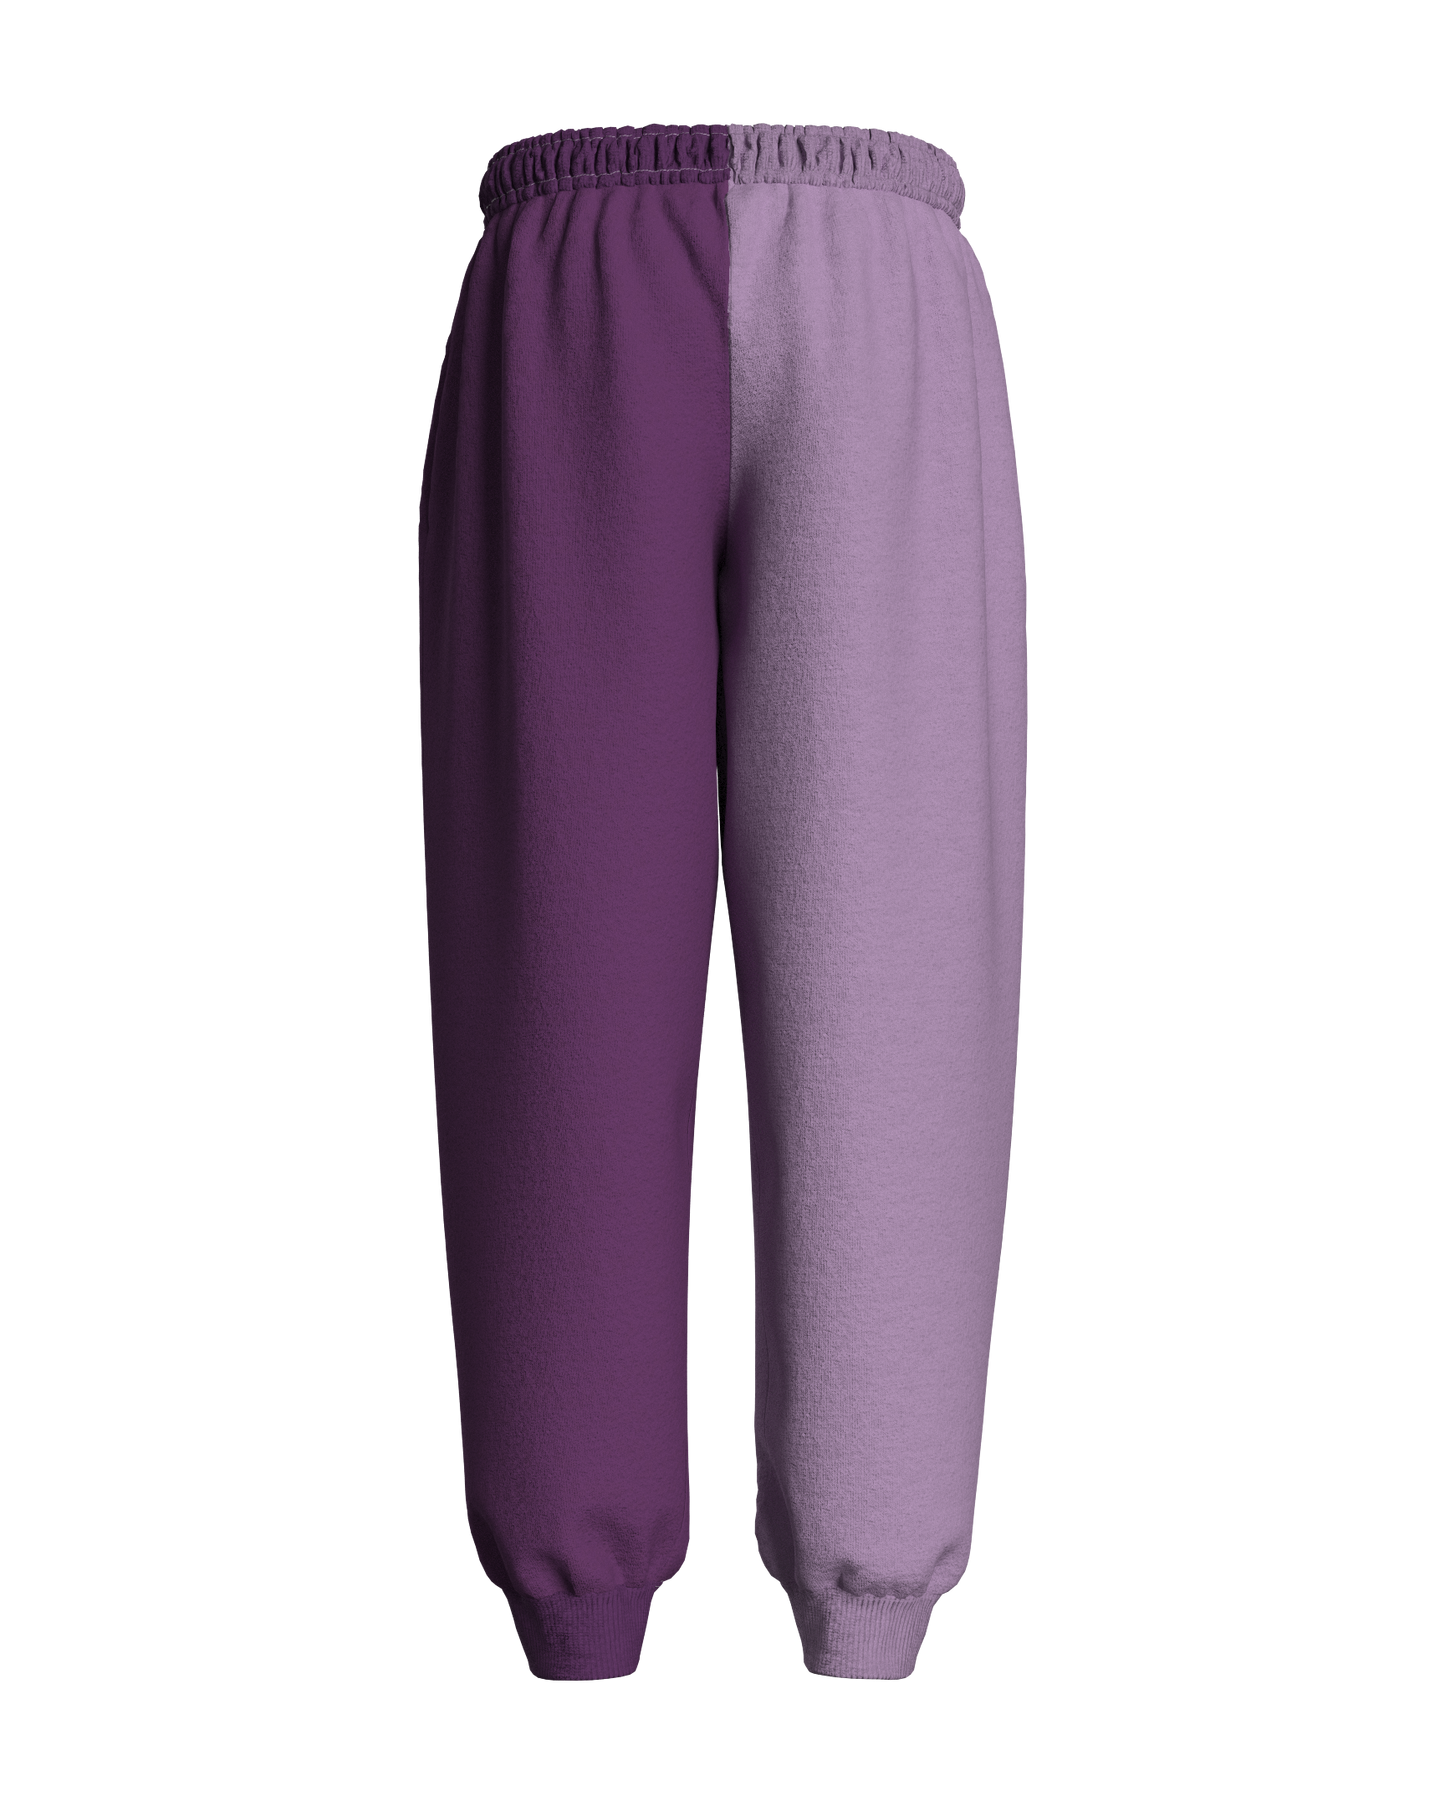 Bermuda Purple So Shadey Sweatsuit - All Sizes